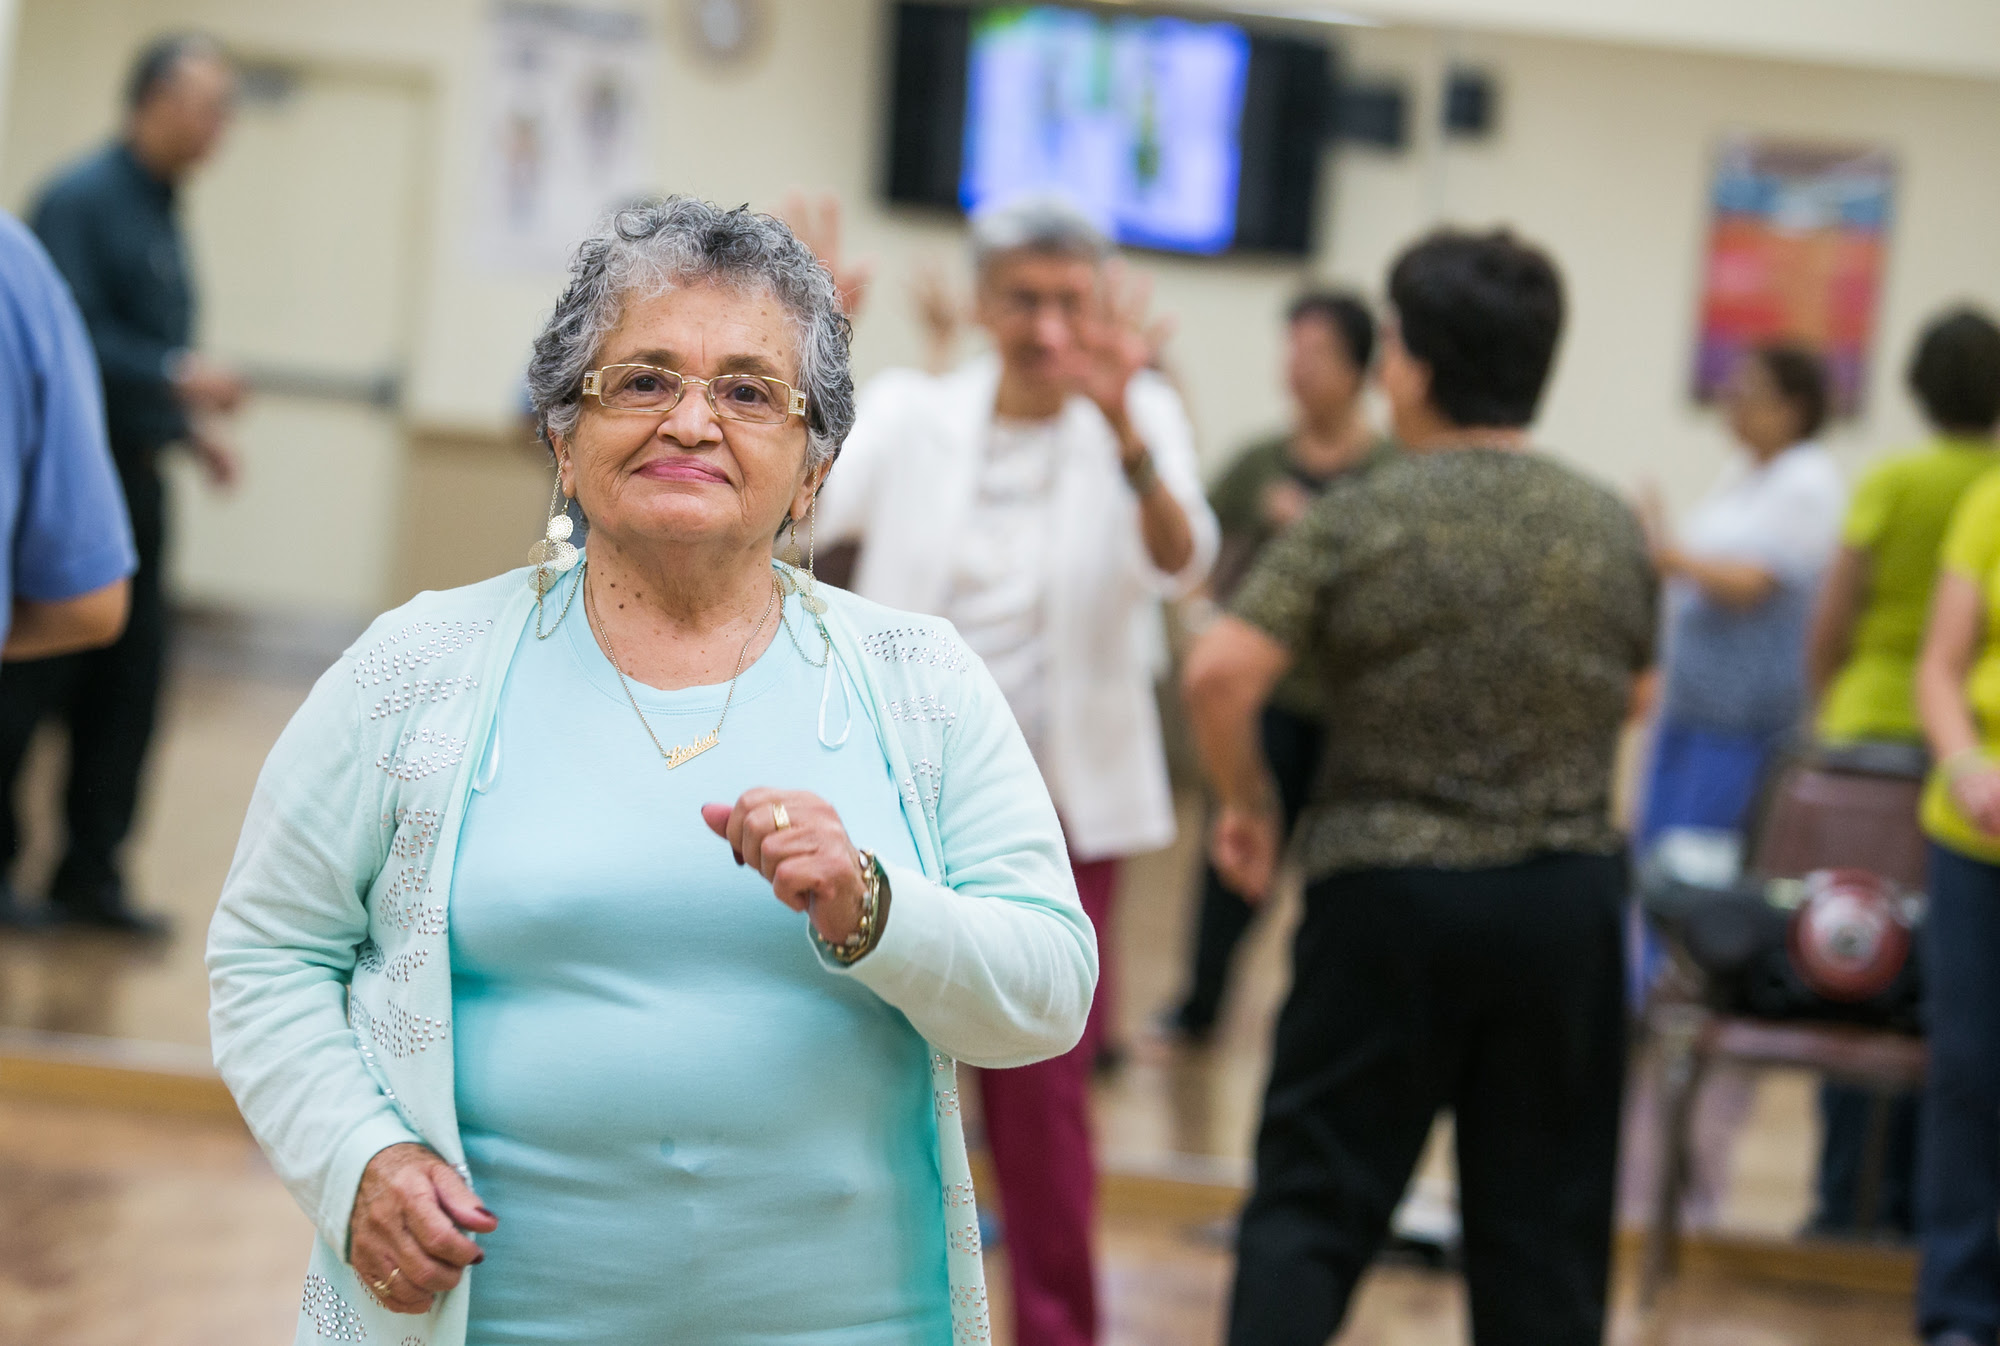 Dancing older woman at a senior center